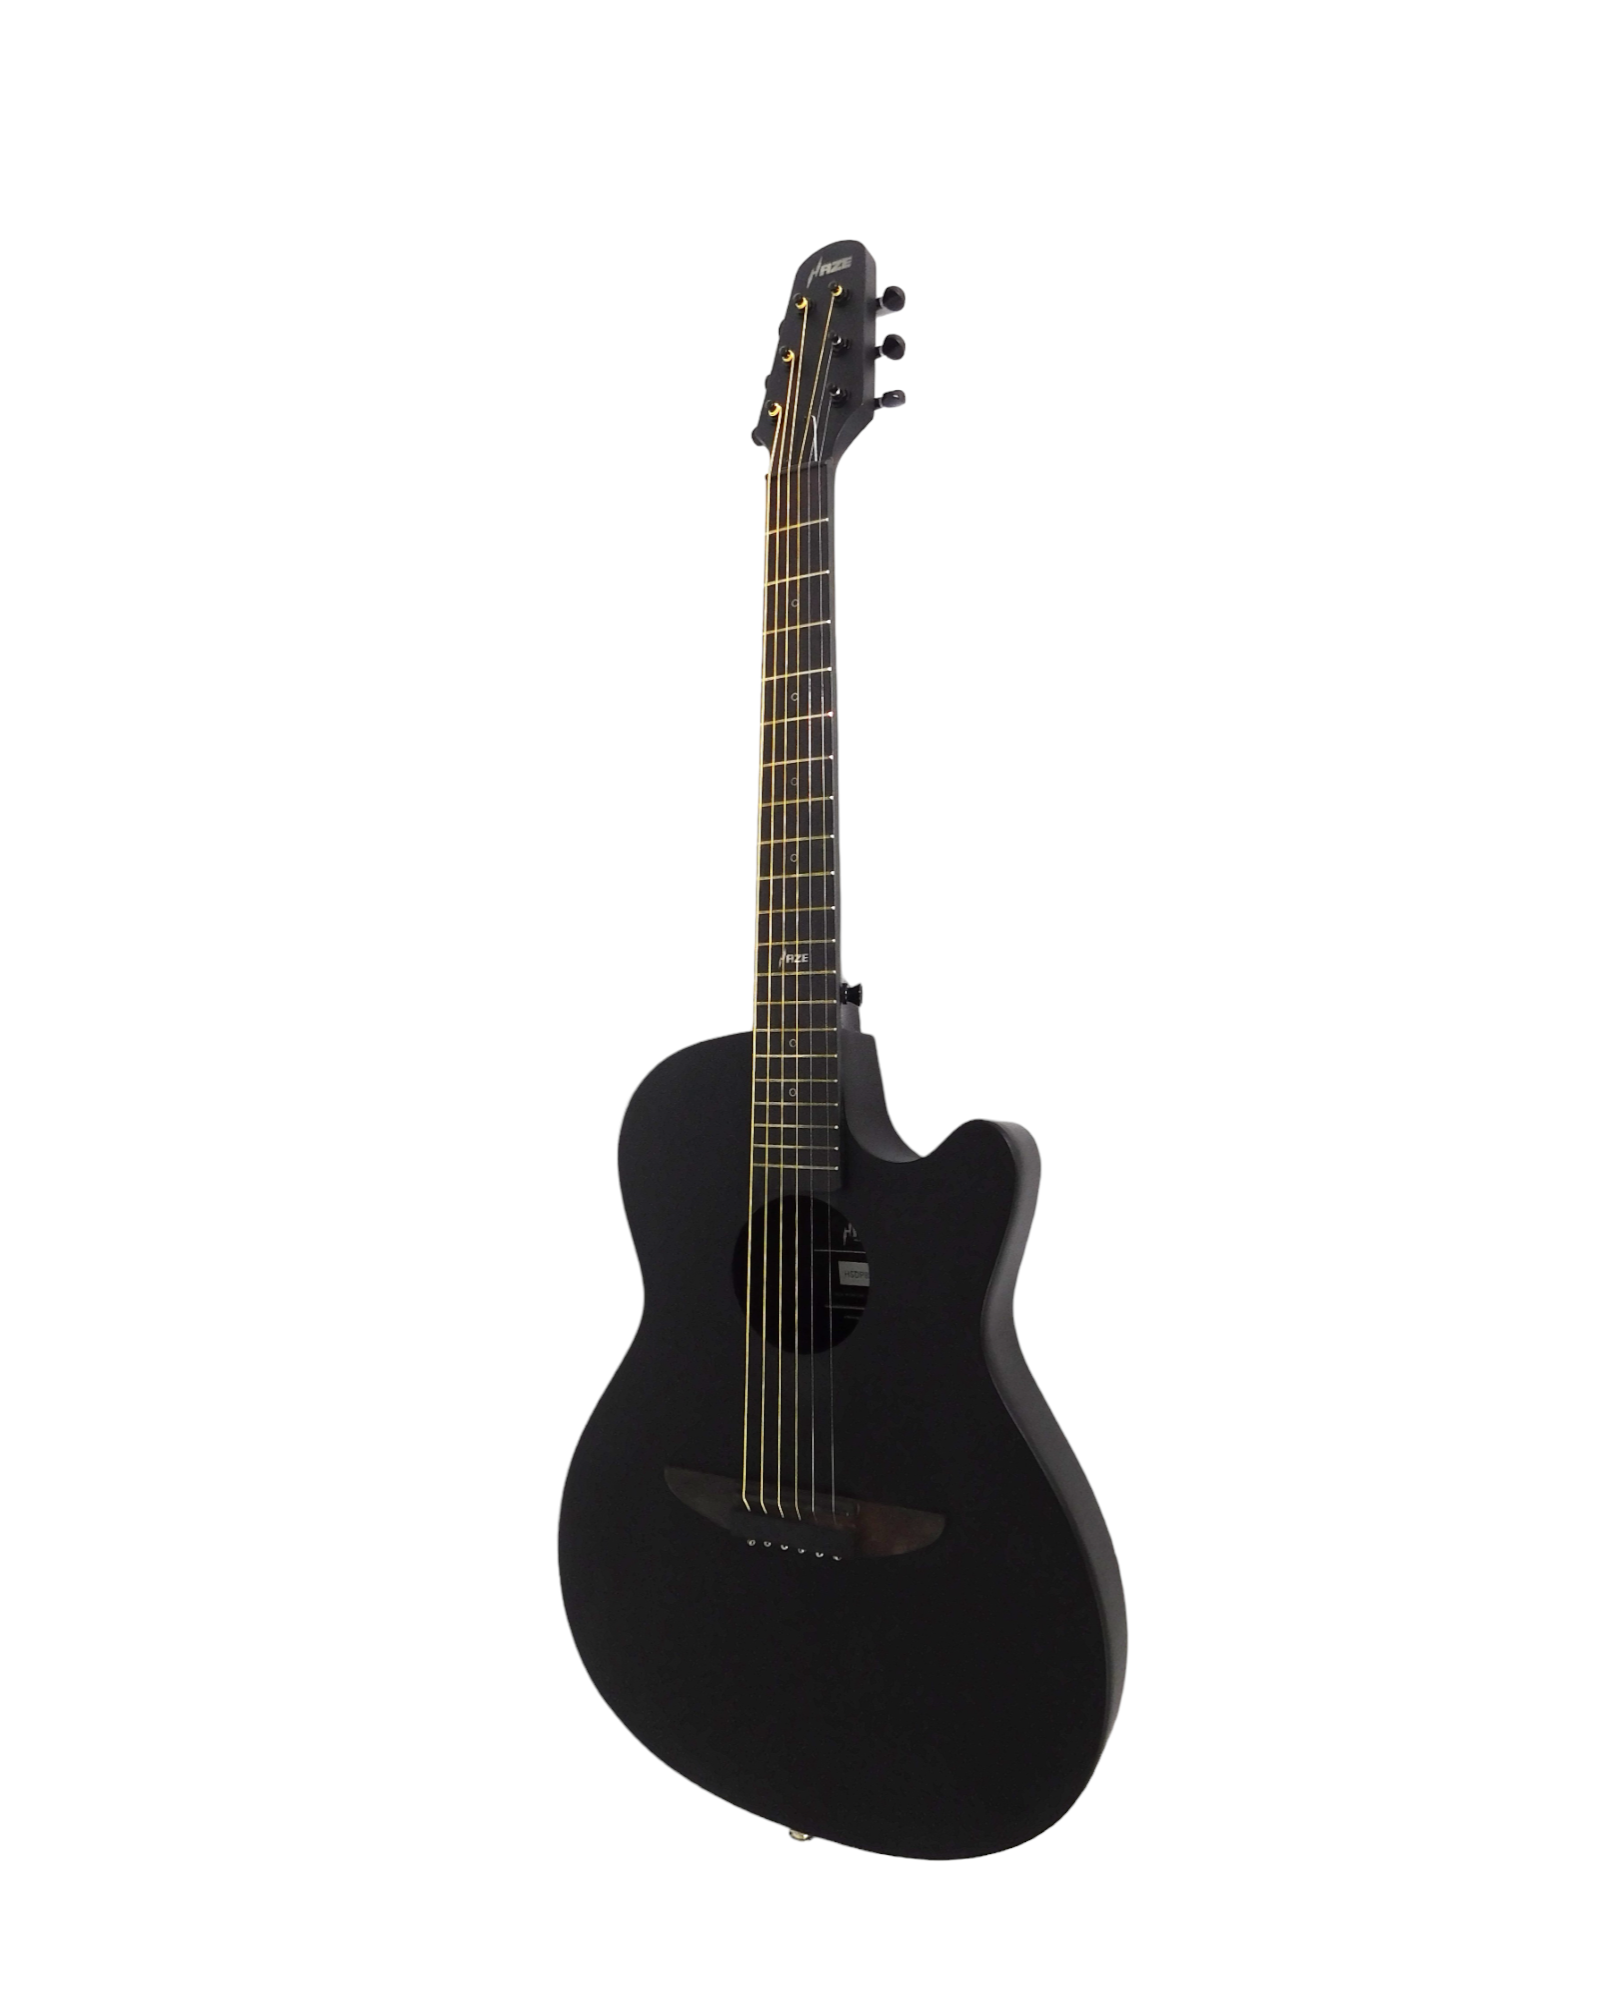 Haze Roundback 38" Traveller Built-In Pickups Acoustic Guitar - Black HSDP836CEQMBK